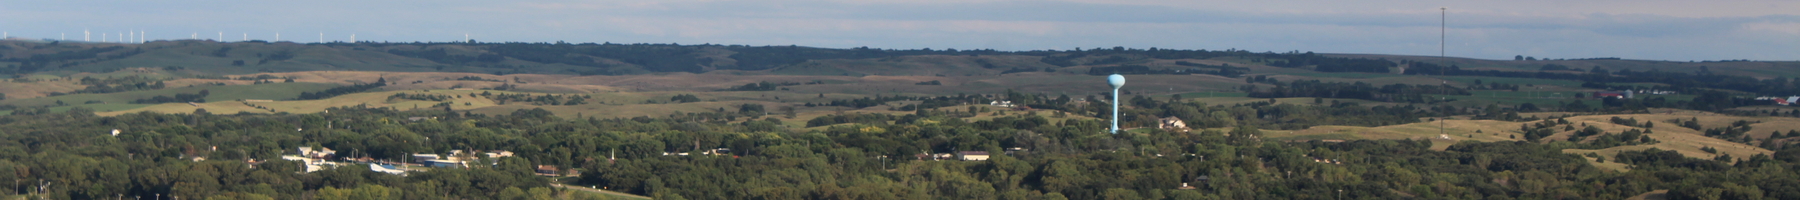 Niobrara Nebraska from nearby hill